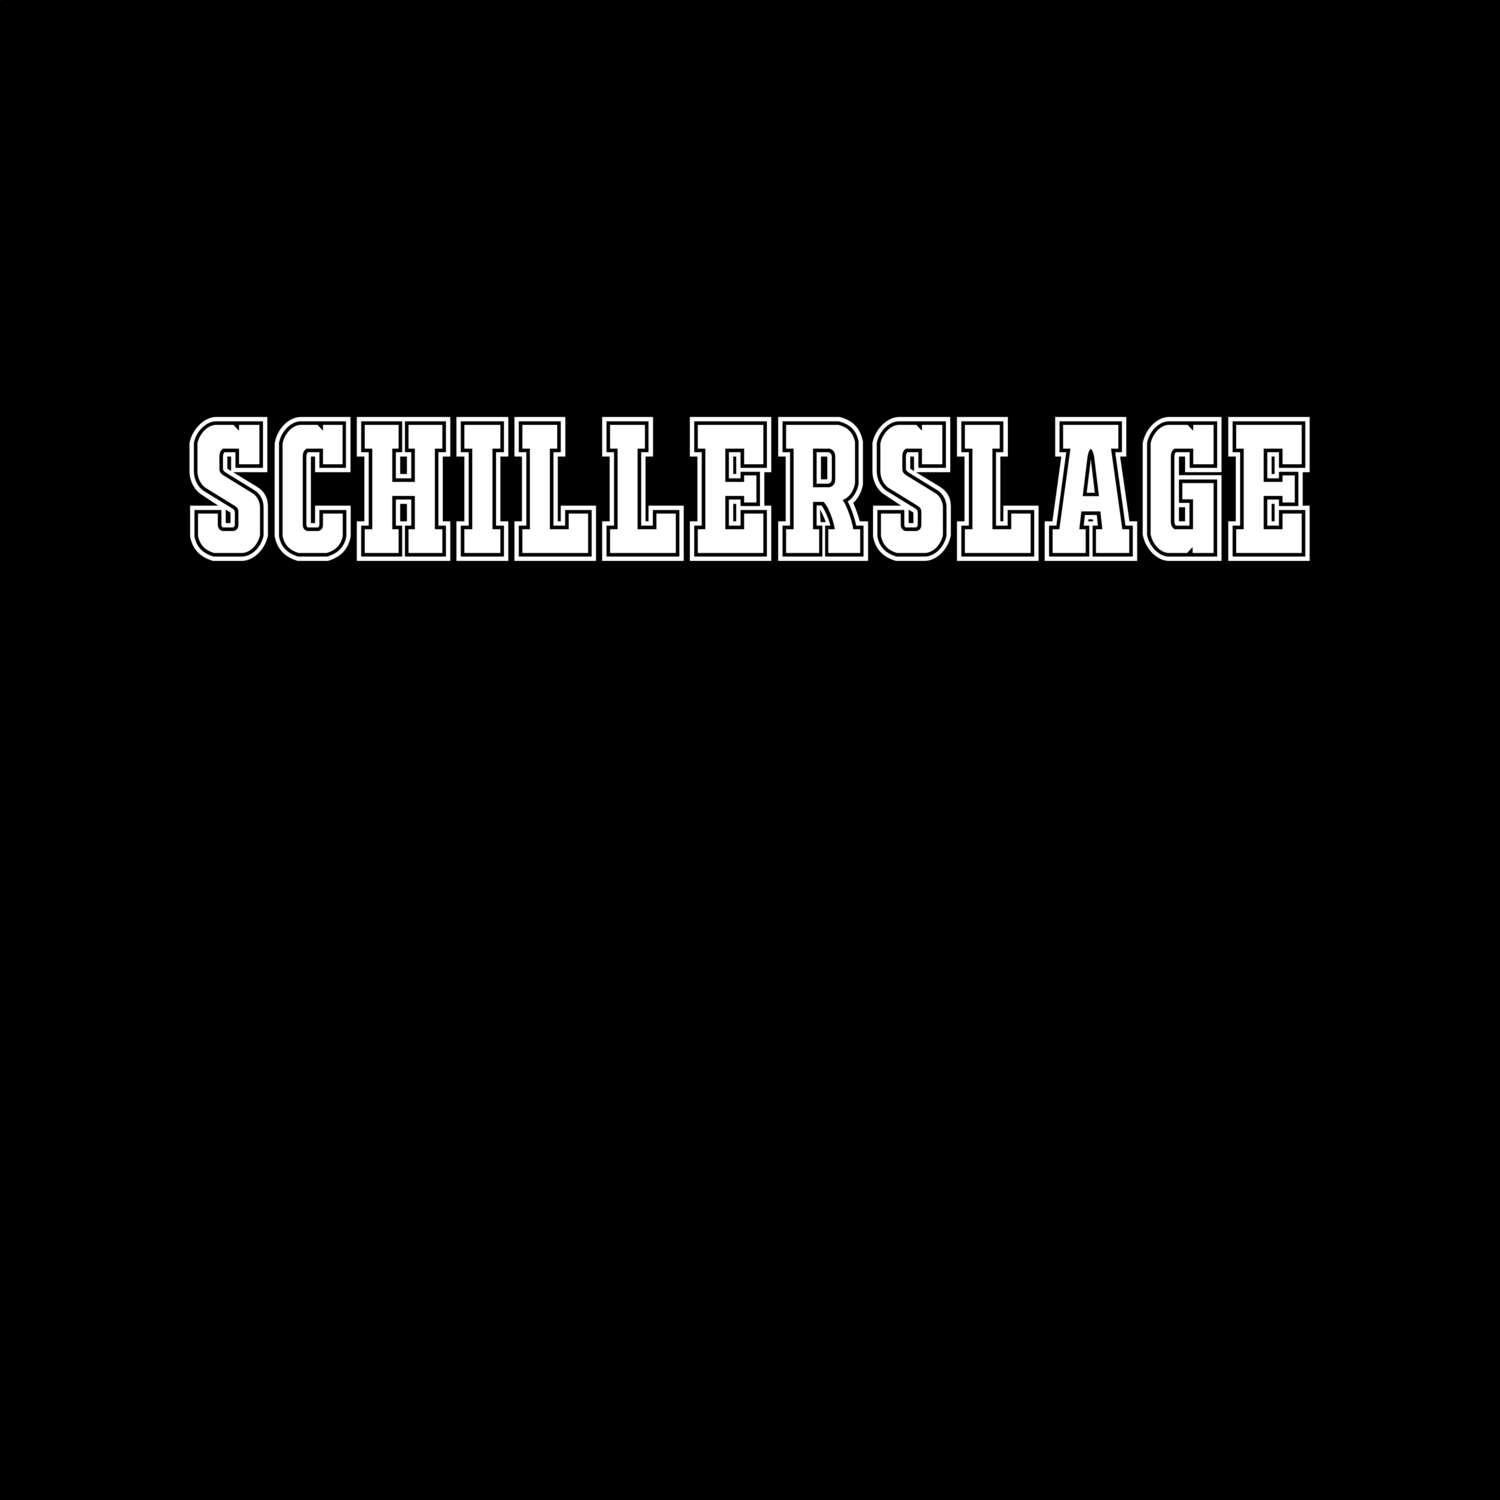 Schillerslage T-Shirt »Classic«